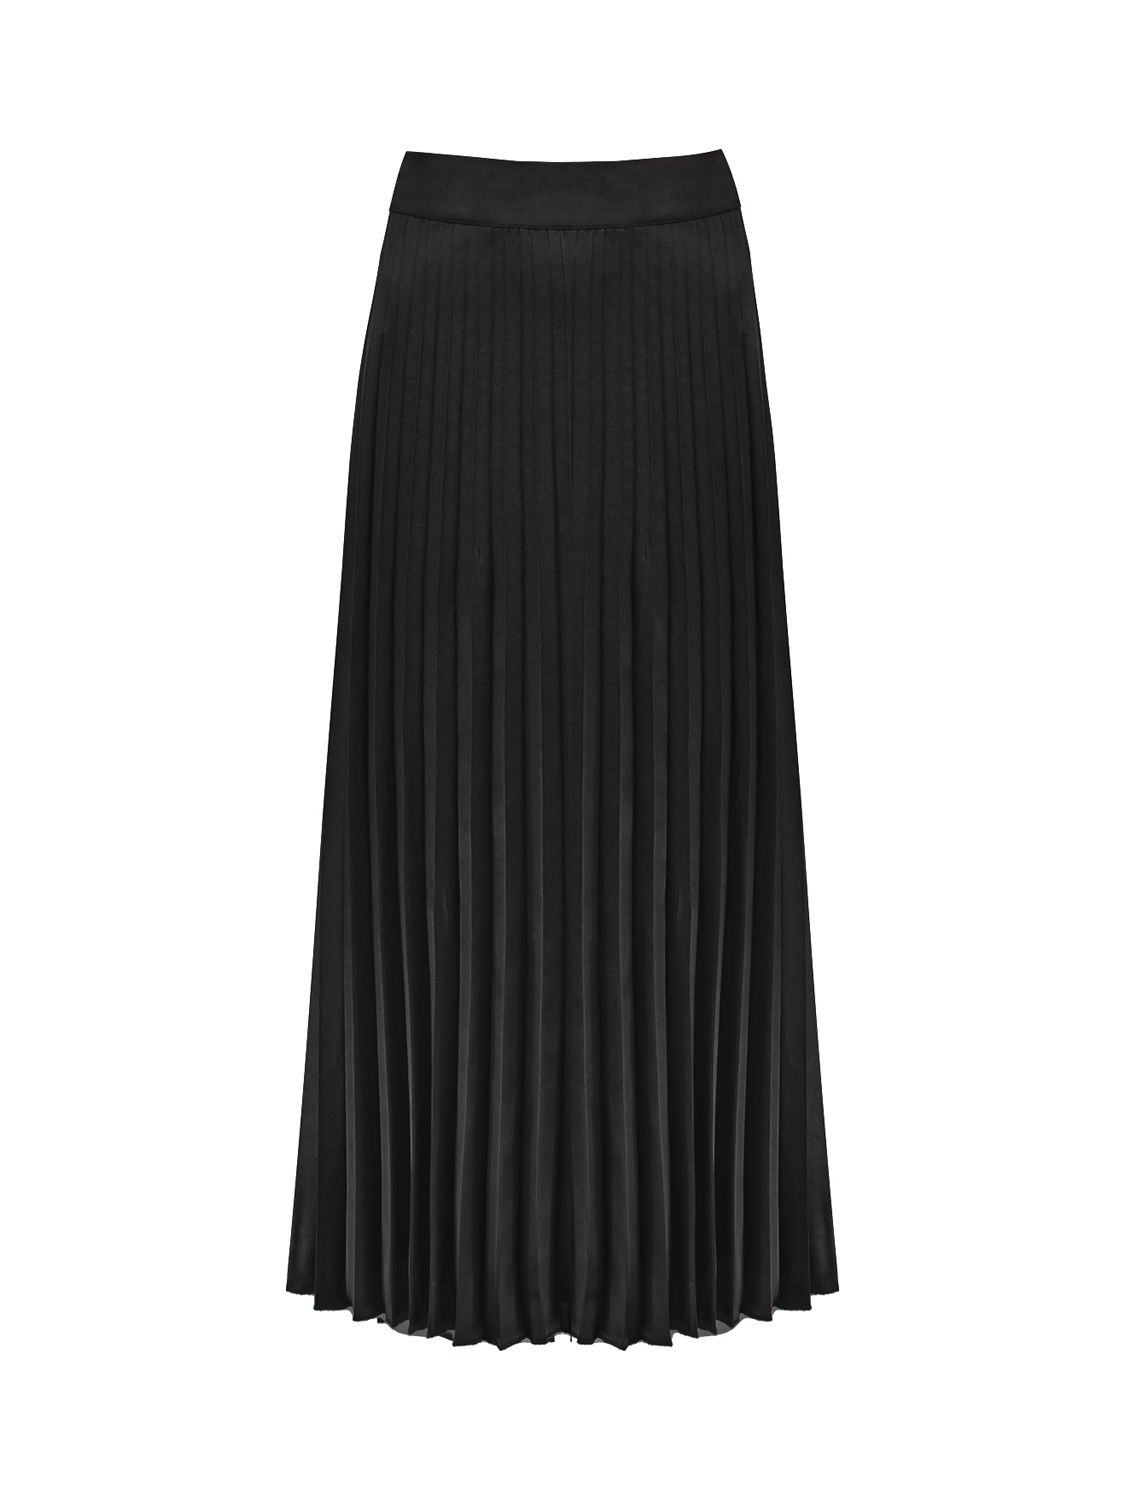 Ro&Zo Pleated Satin Skirt, Black at John Lewis & Partners